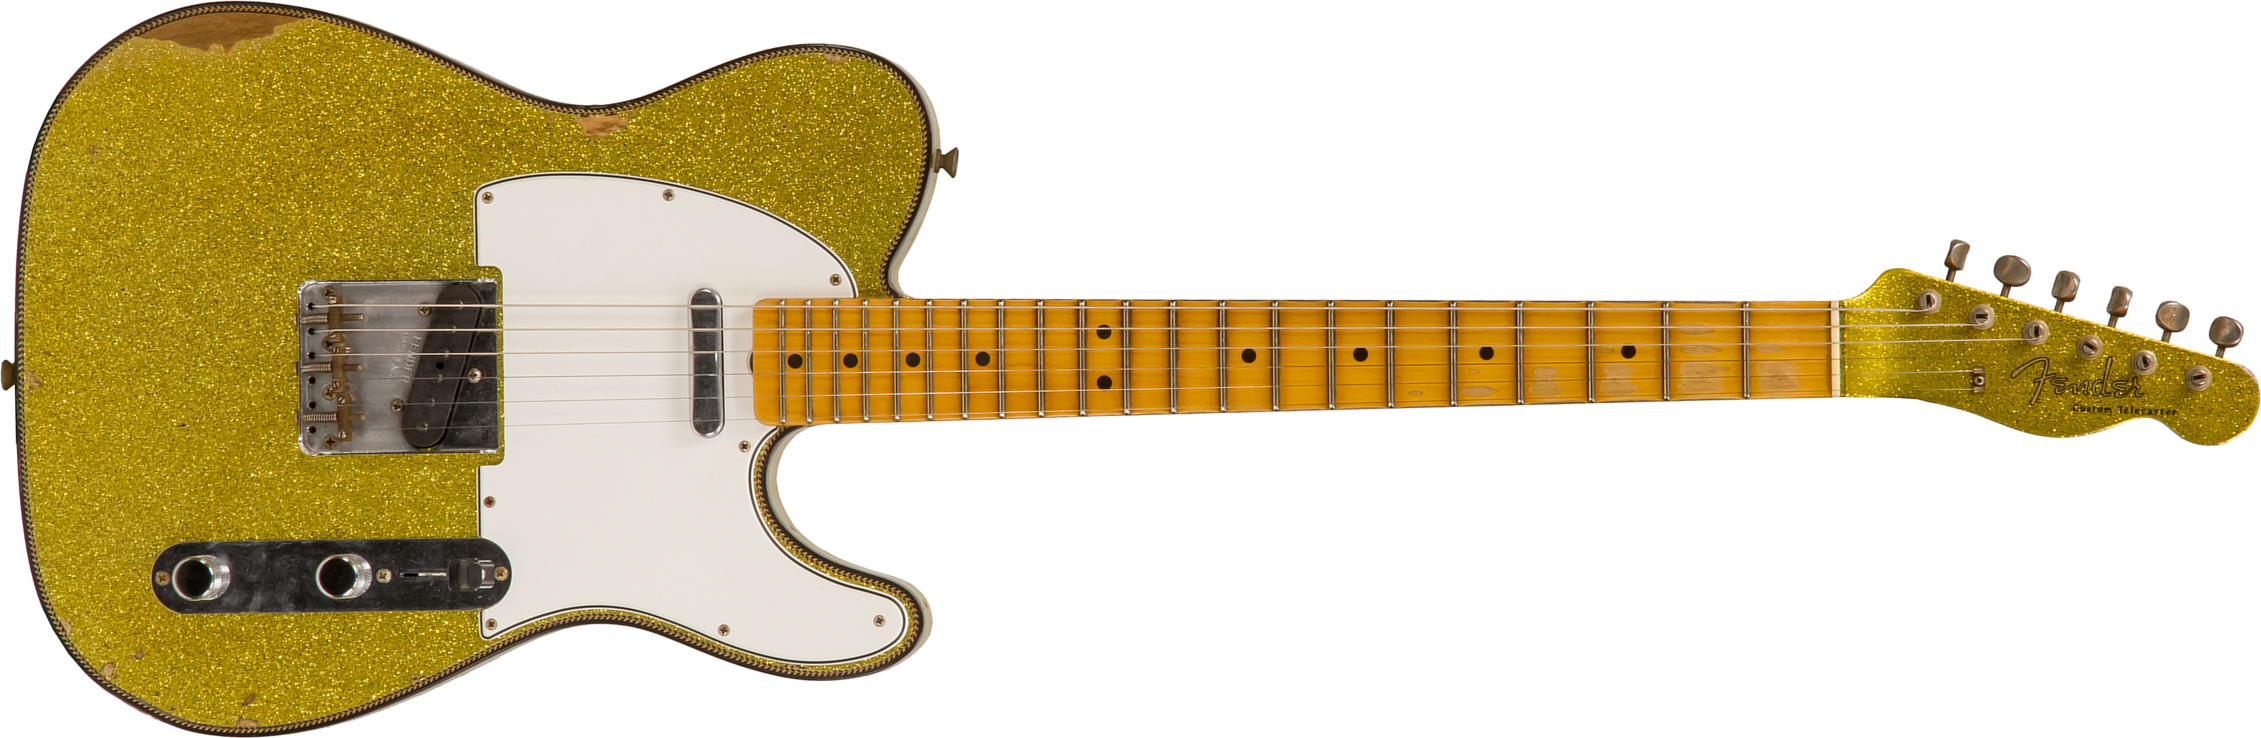 Fender Custom Shop Tele Custom 1963 2020 Ltd Rw #cz545983 - Relic Chartreuse Sparkle - Guitarra eléctrica con forma de tel - Main picture